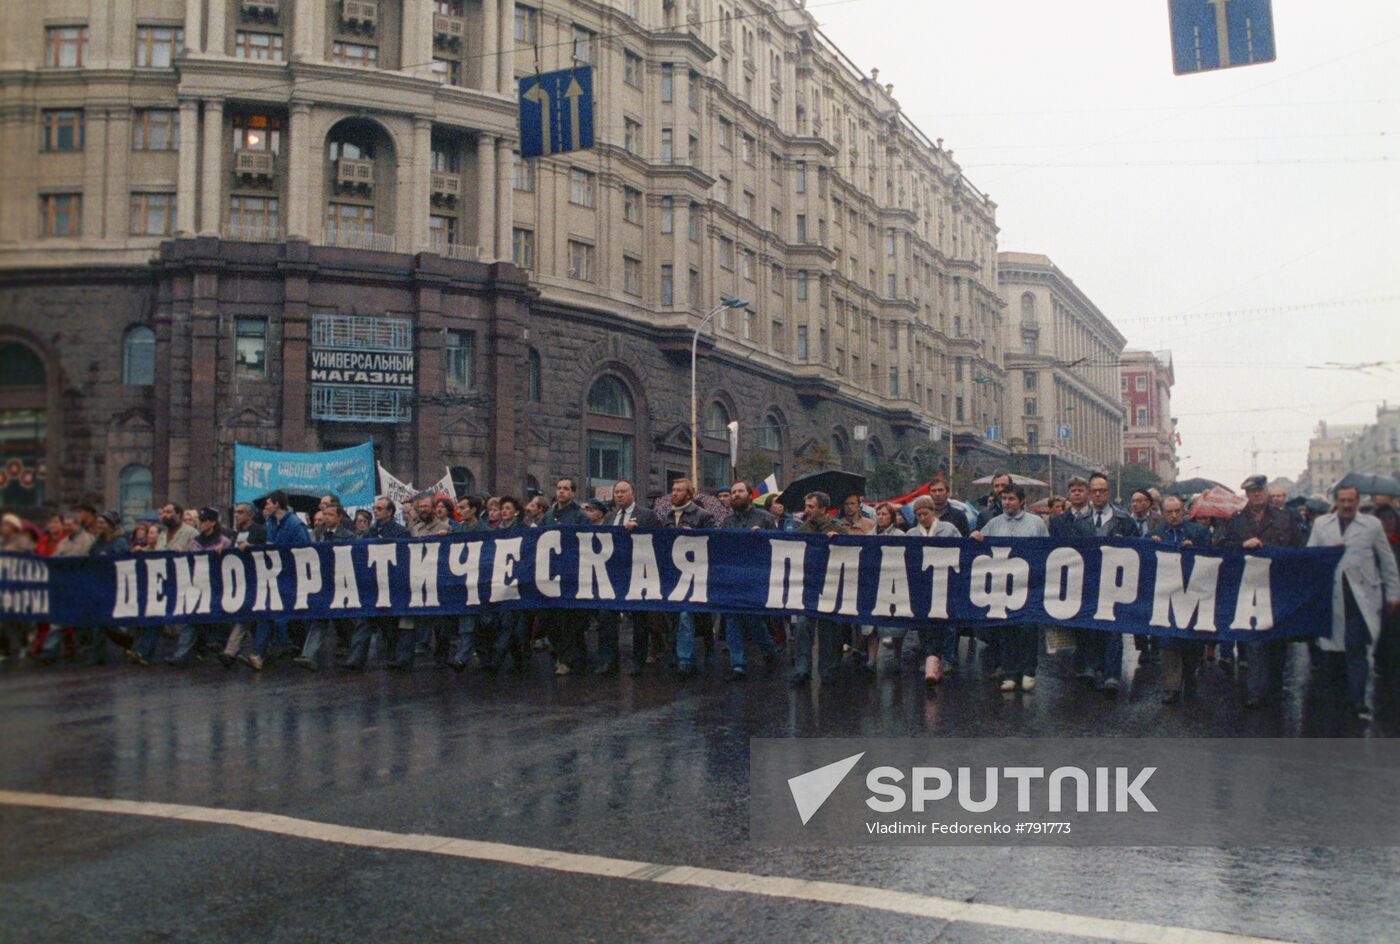 Protest rally, Tverskaya Street